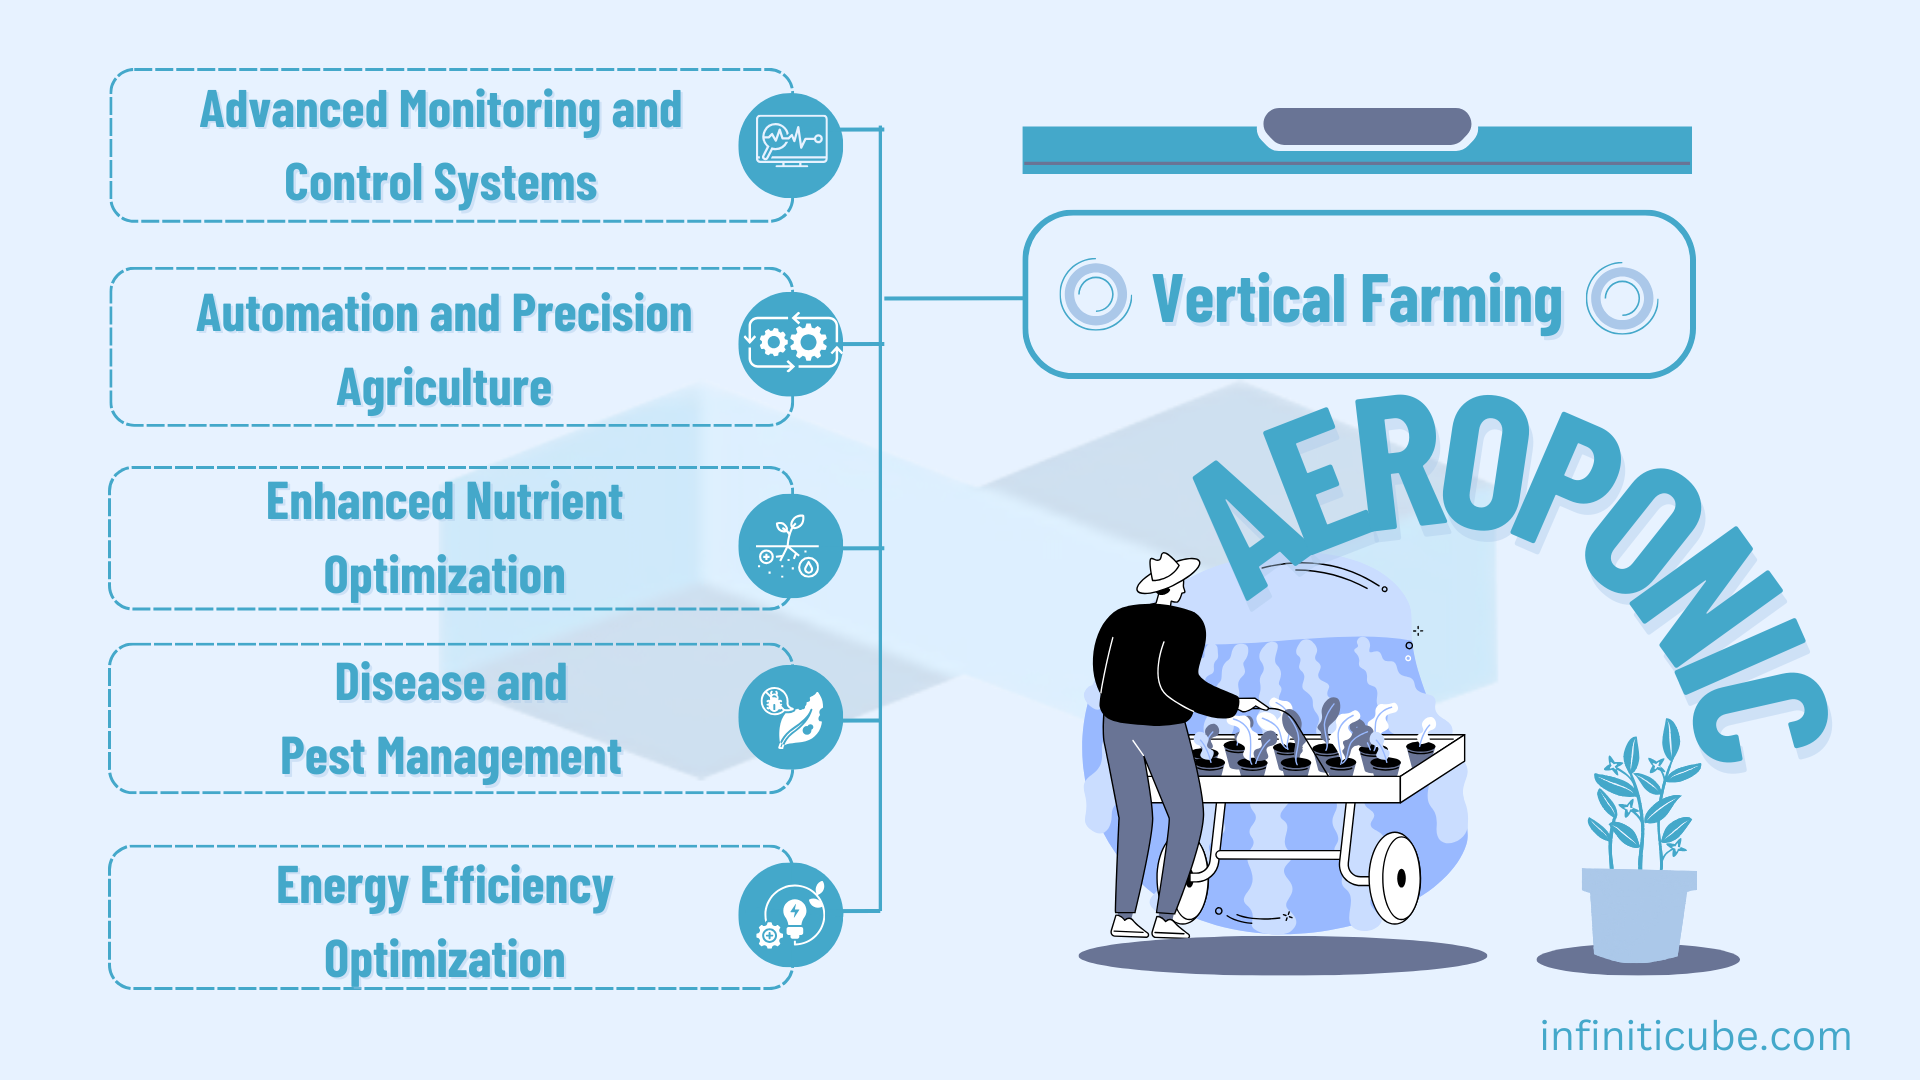 Technology in Aeroponic Farming